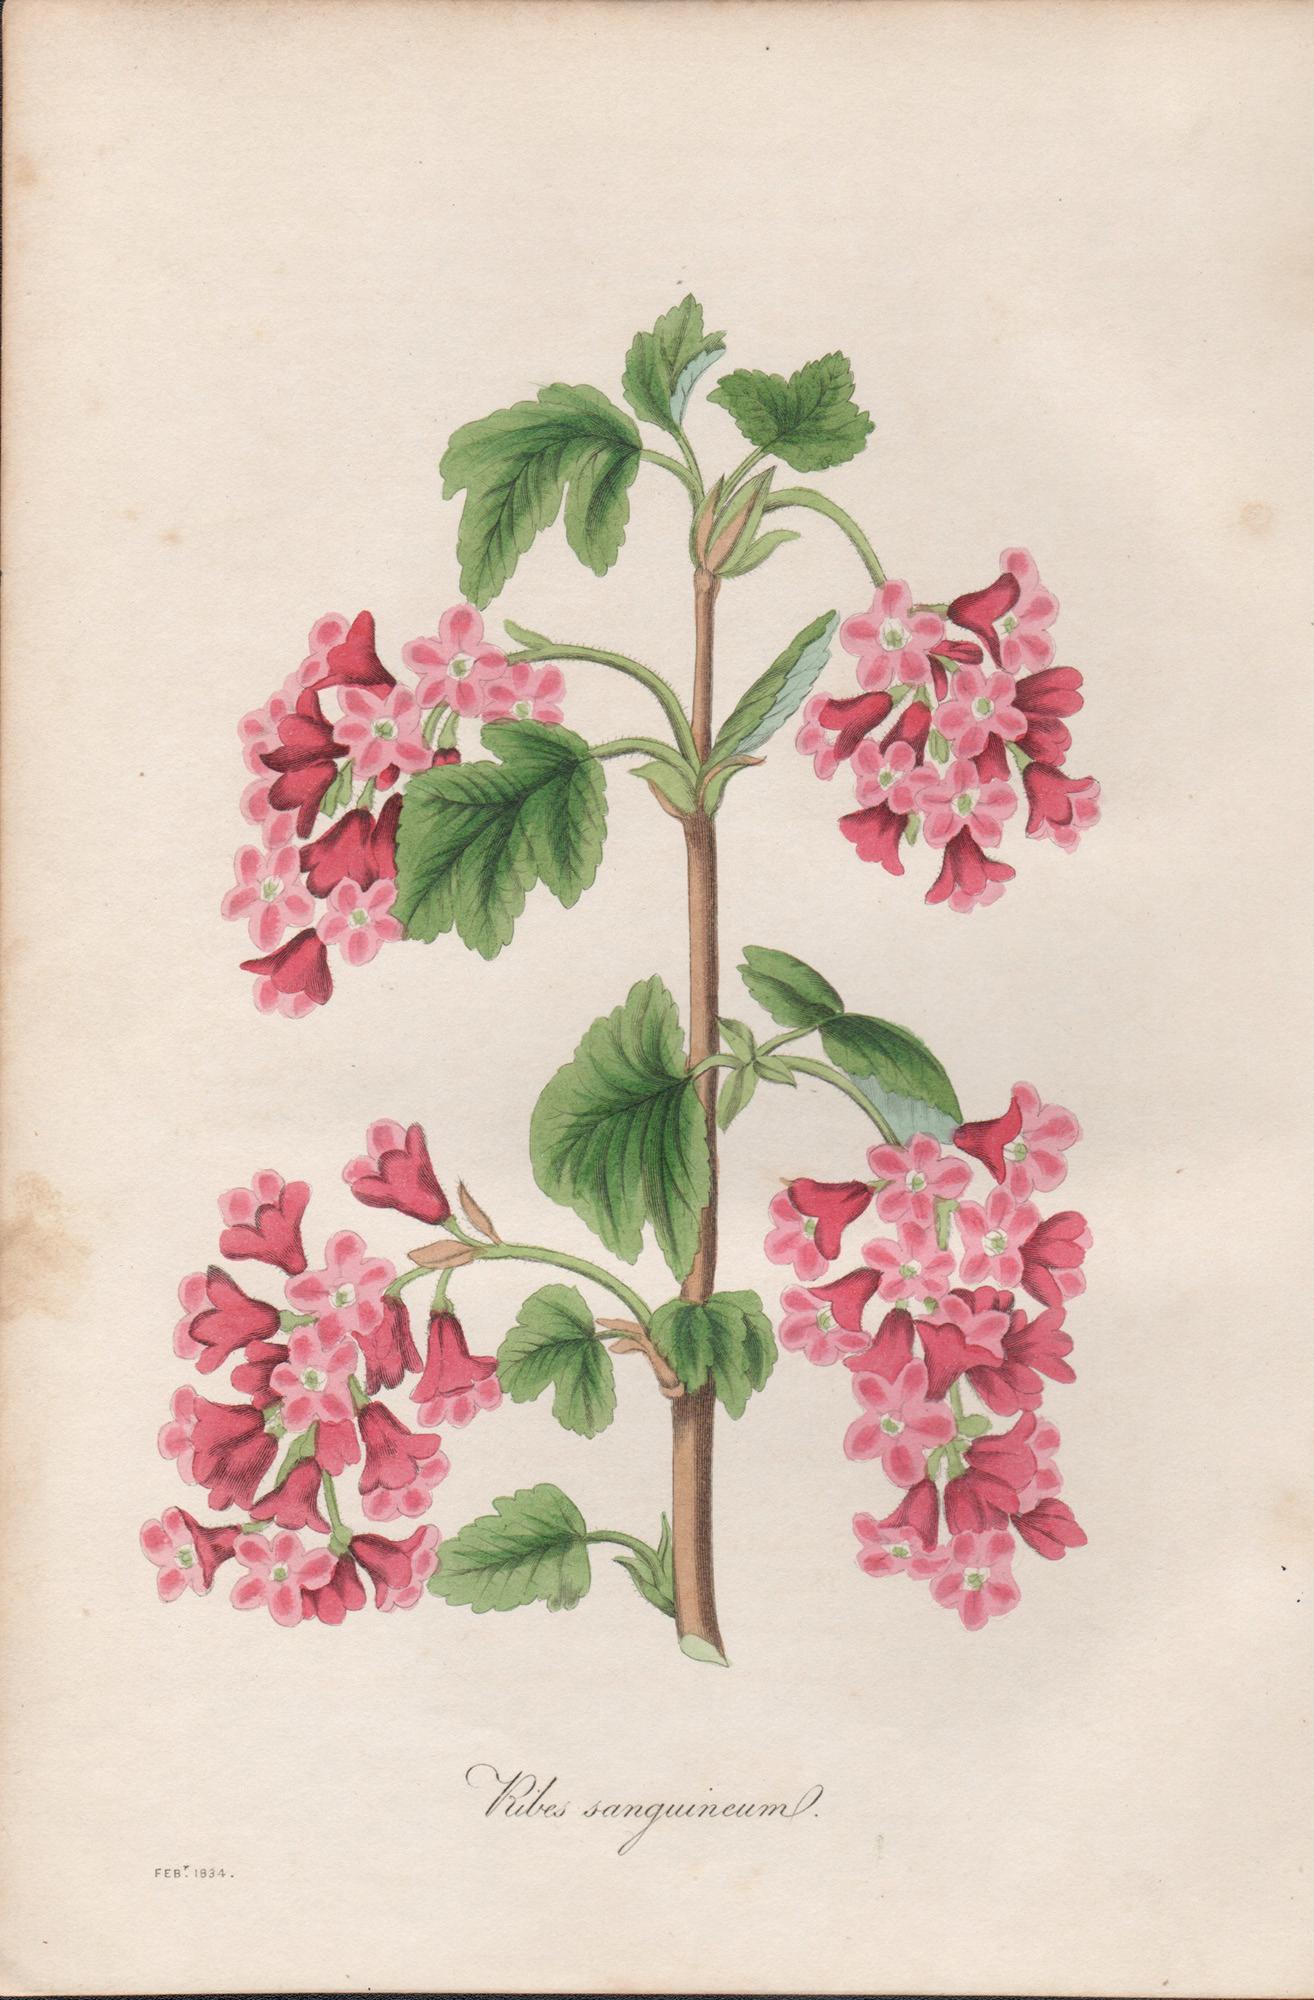 Frederick William Smith Print - Ribes sanguineum, antique botanical pink flower engraving